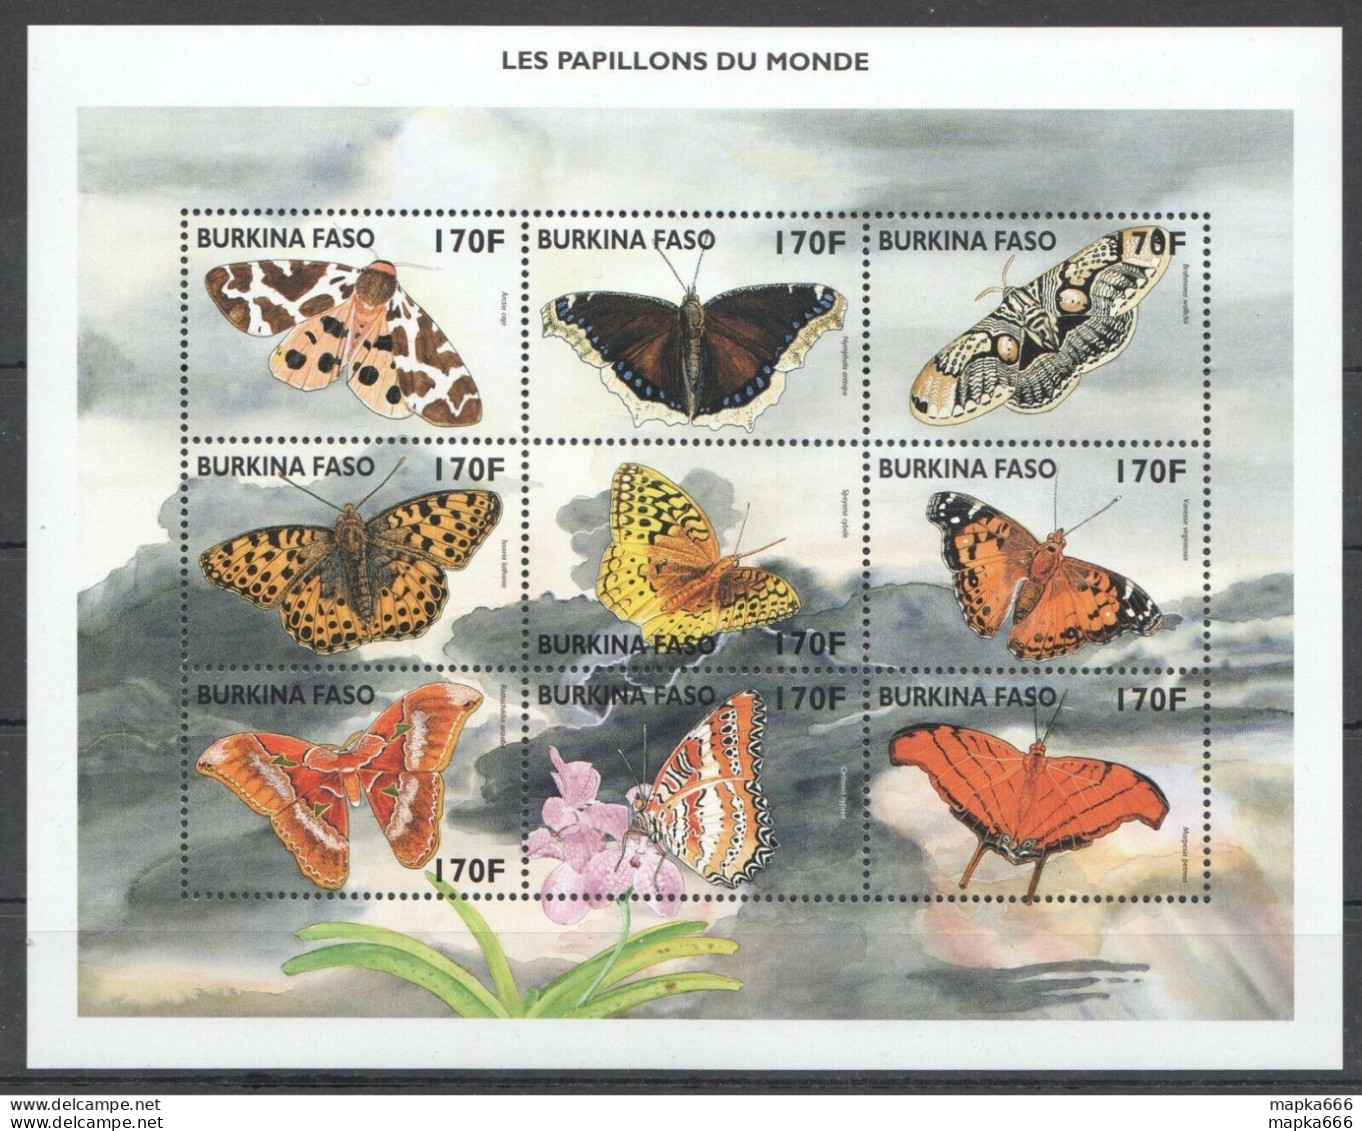 Pk279 Burkina Faso Butterflies Les Papillons Du Monde 1Kb Mnh Stamps - Vlinders